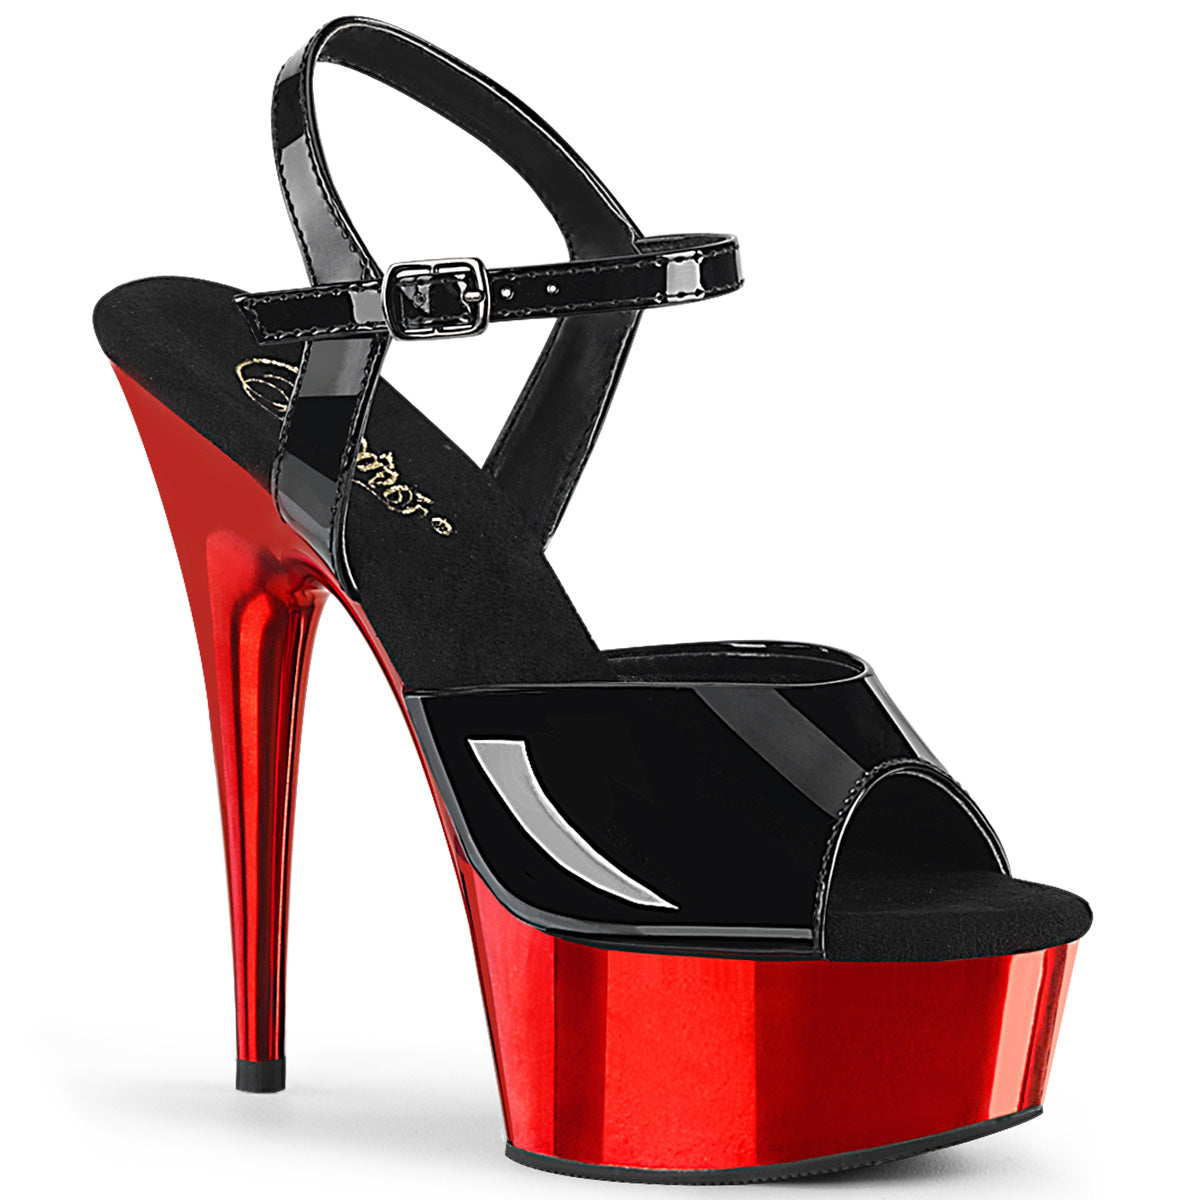 DELIGHT-609 6" Black with Red Chrome Pole Dancer Platform Shoes